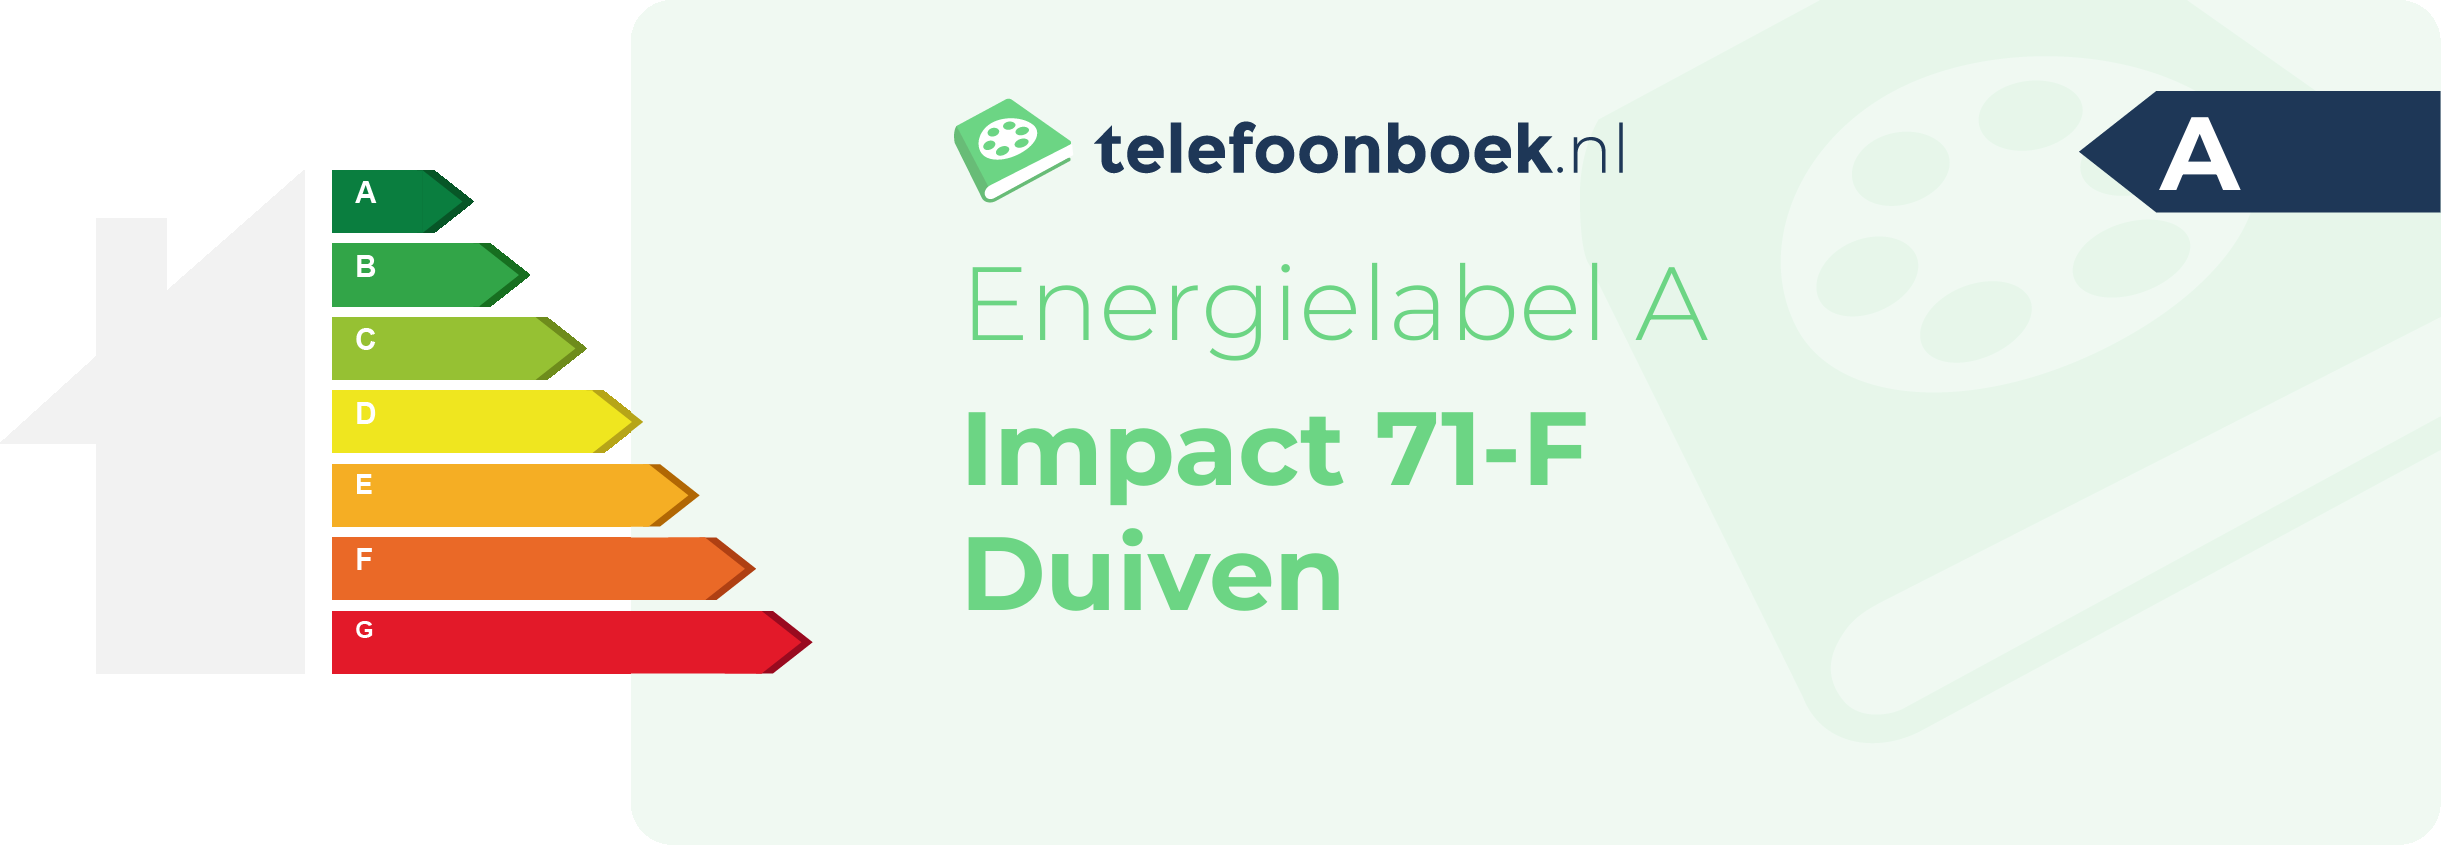 Energielabel Impact 71-F Duiven